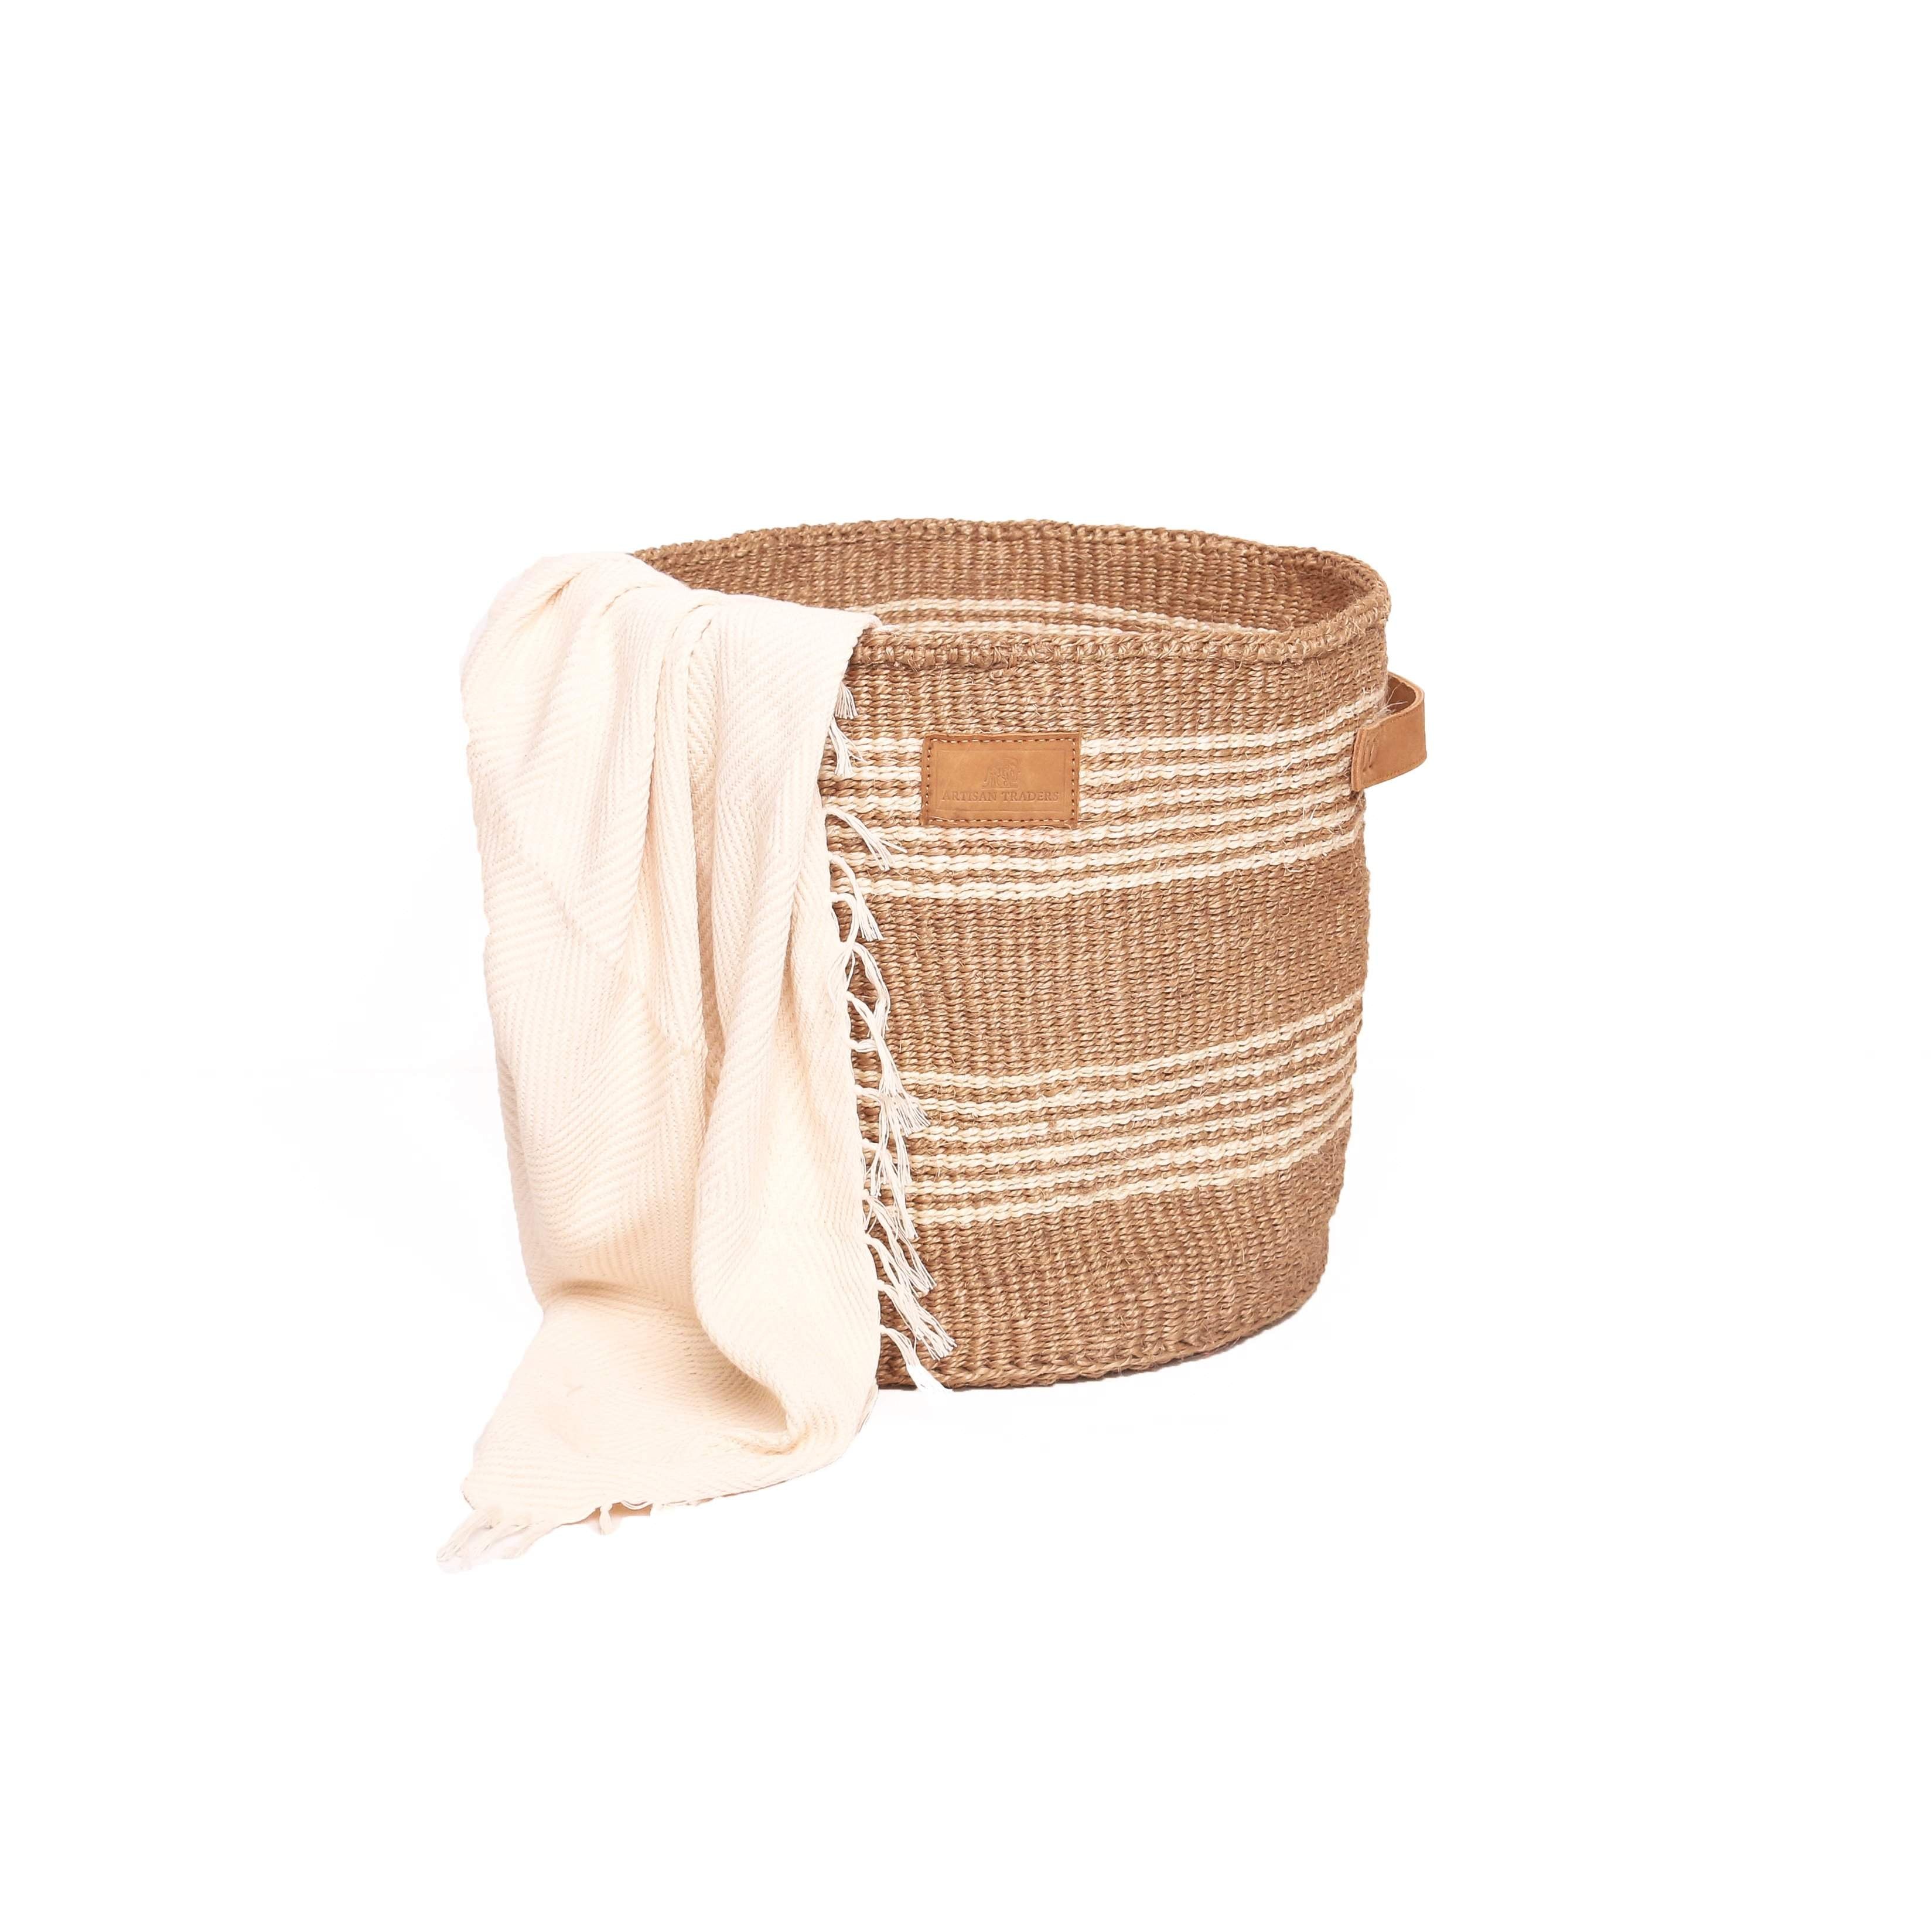 Kiondoo basket Beige fine stripe-Artisan Traders-african,african basket,basket,fairtrade,handcrafted,handmade,kenya,kiondo,kiondoo,natural,sisal